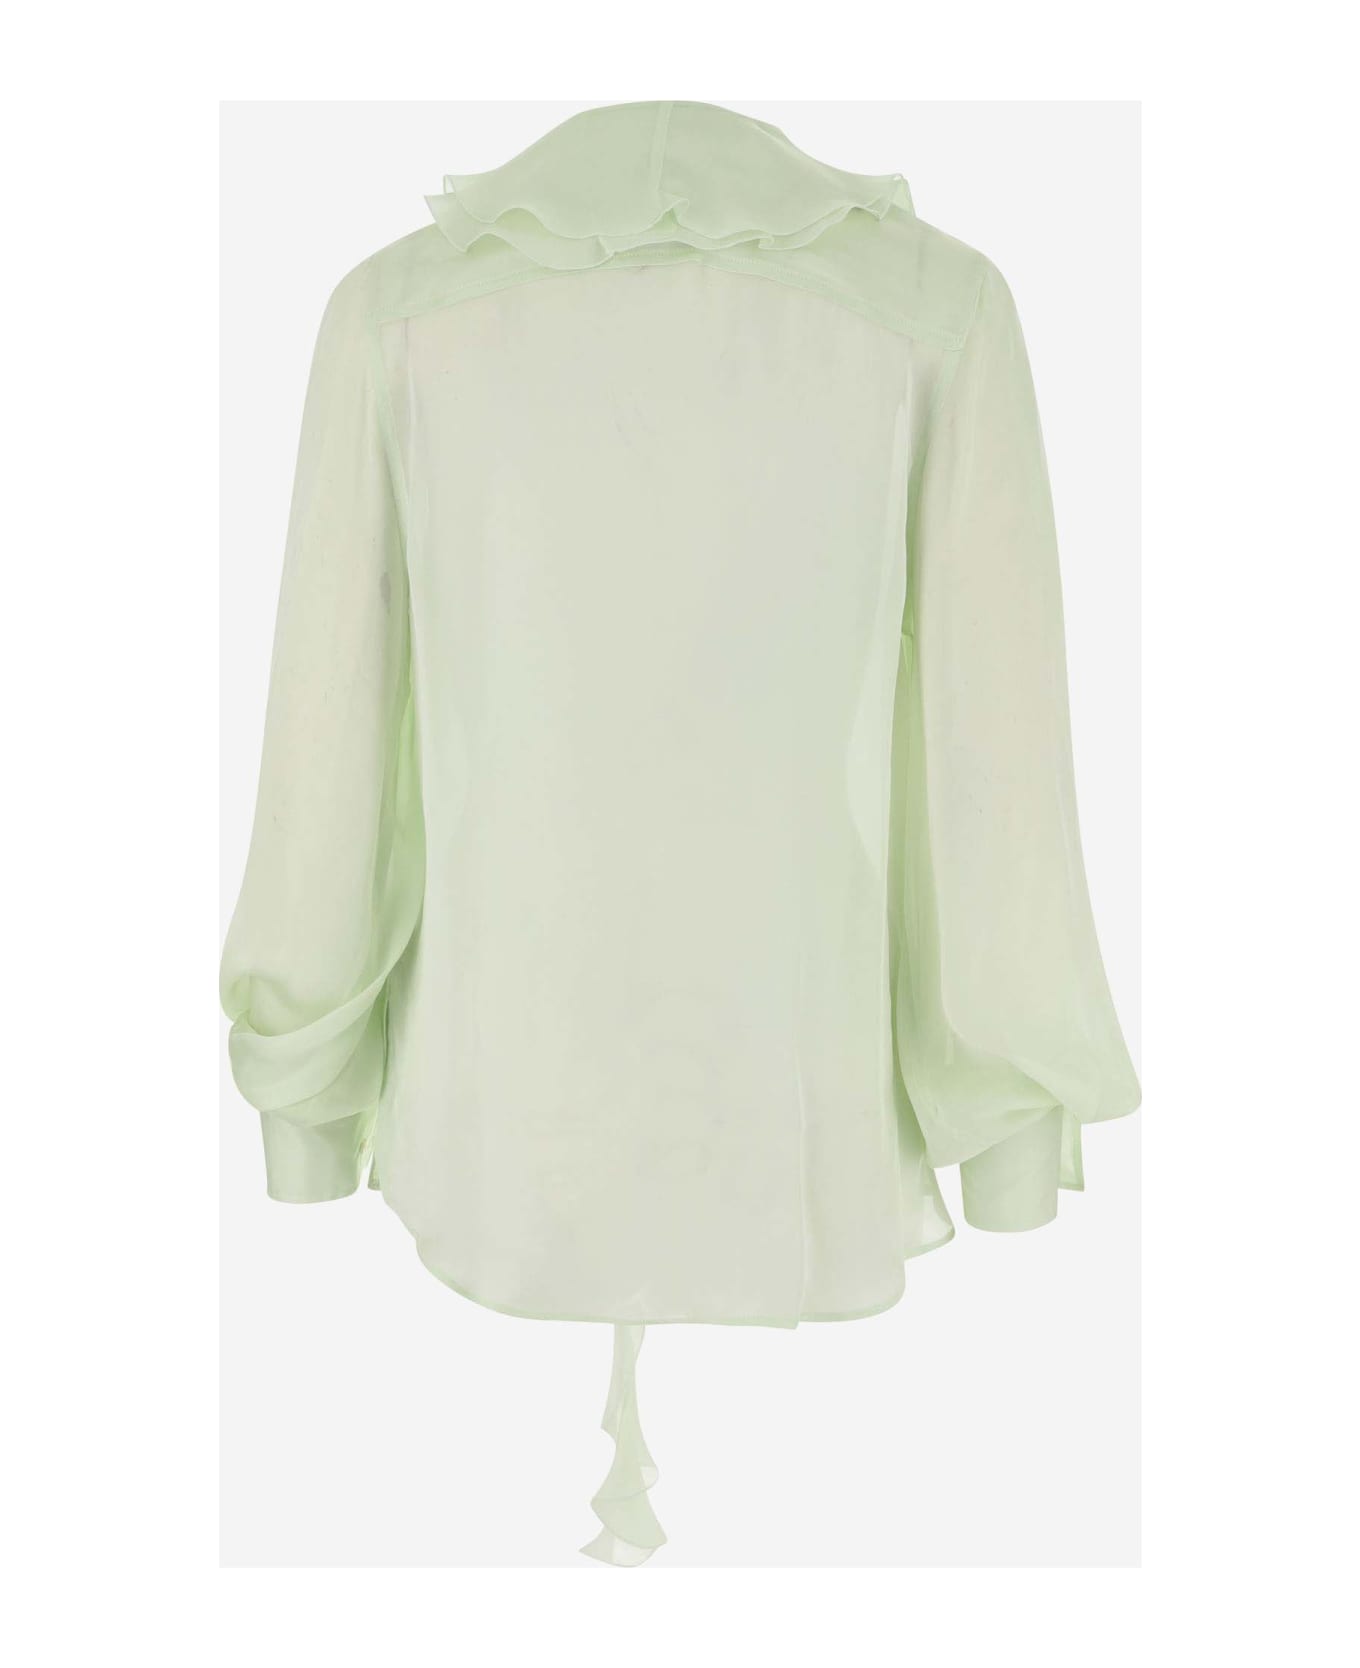 Victoria Beckham Silk Shirt With Ruffles - Green ブラウス